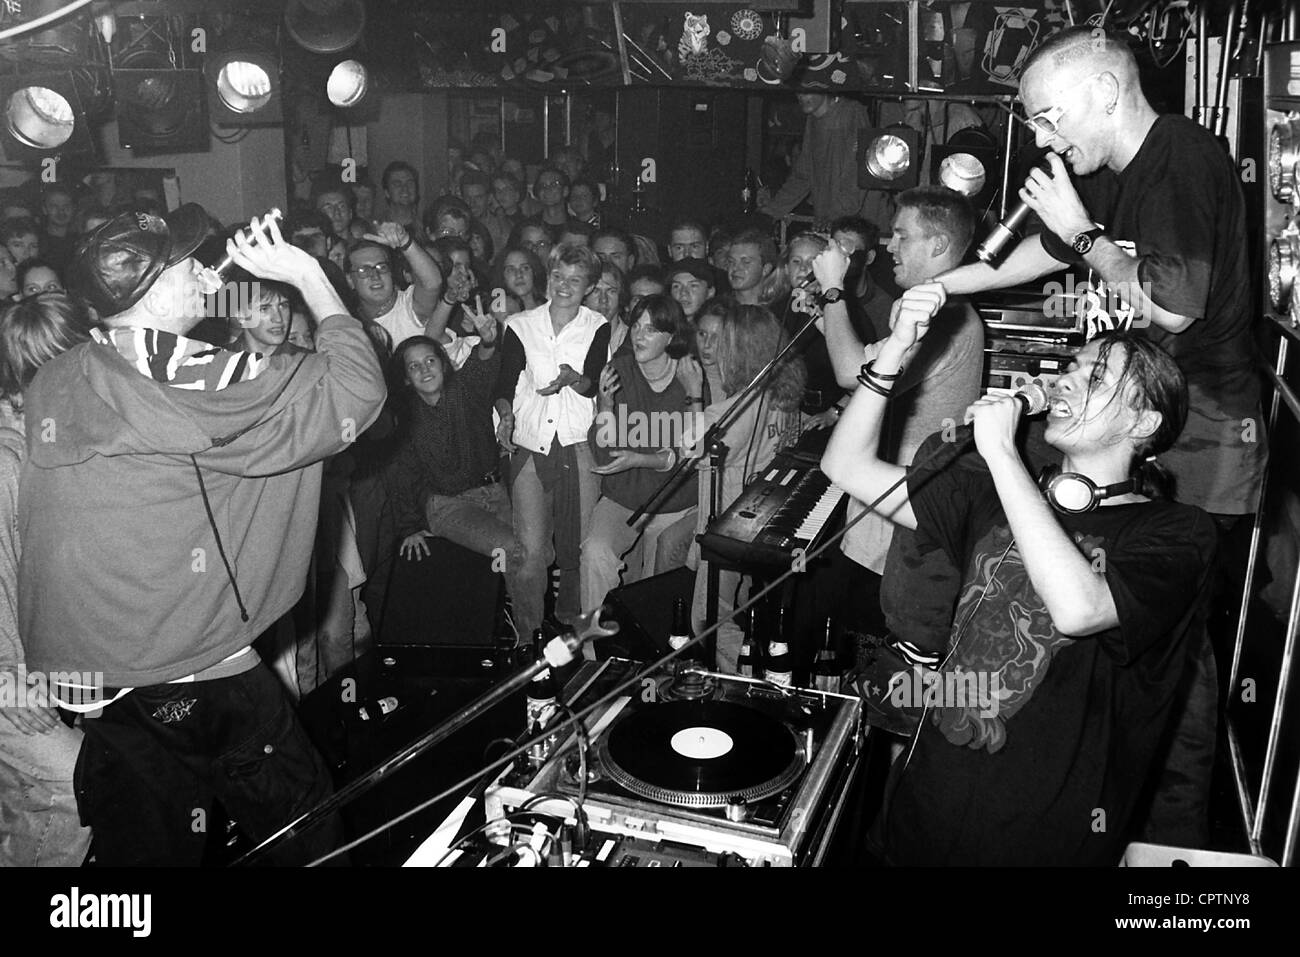 Die Fantastischen Vier, German music group (rap, hip hop), formed in 1986, during a concert, 1994, Stock Photo